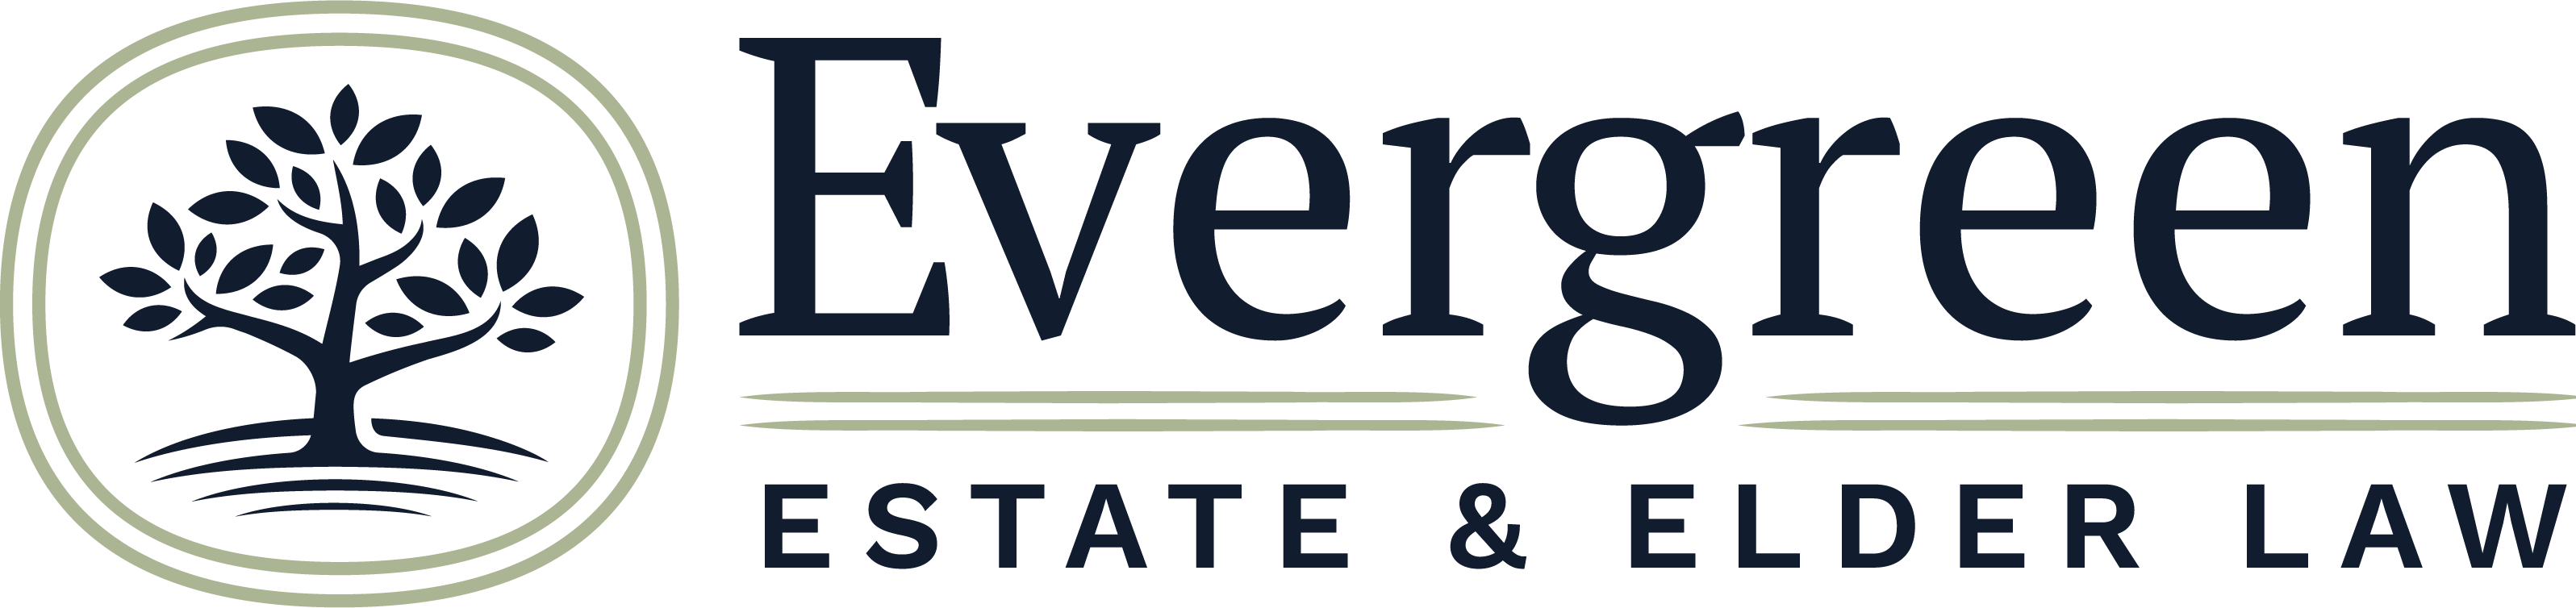 Evergreen Elder Law Logo